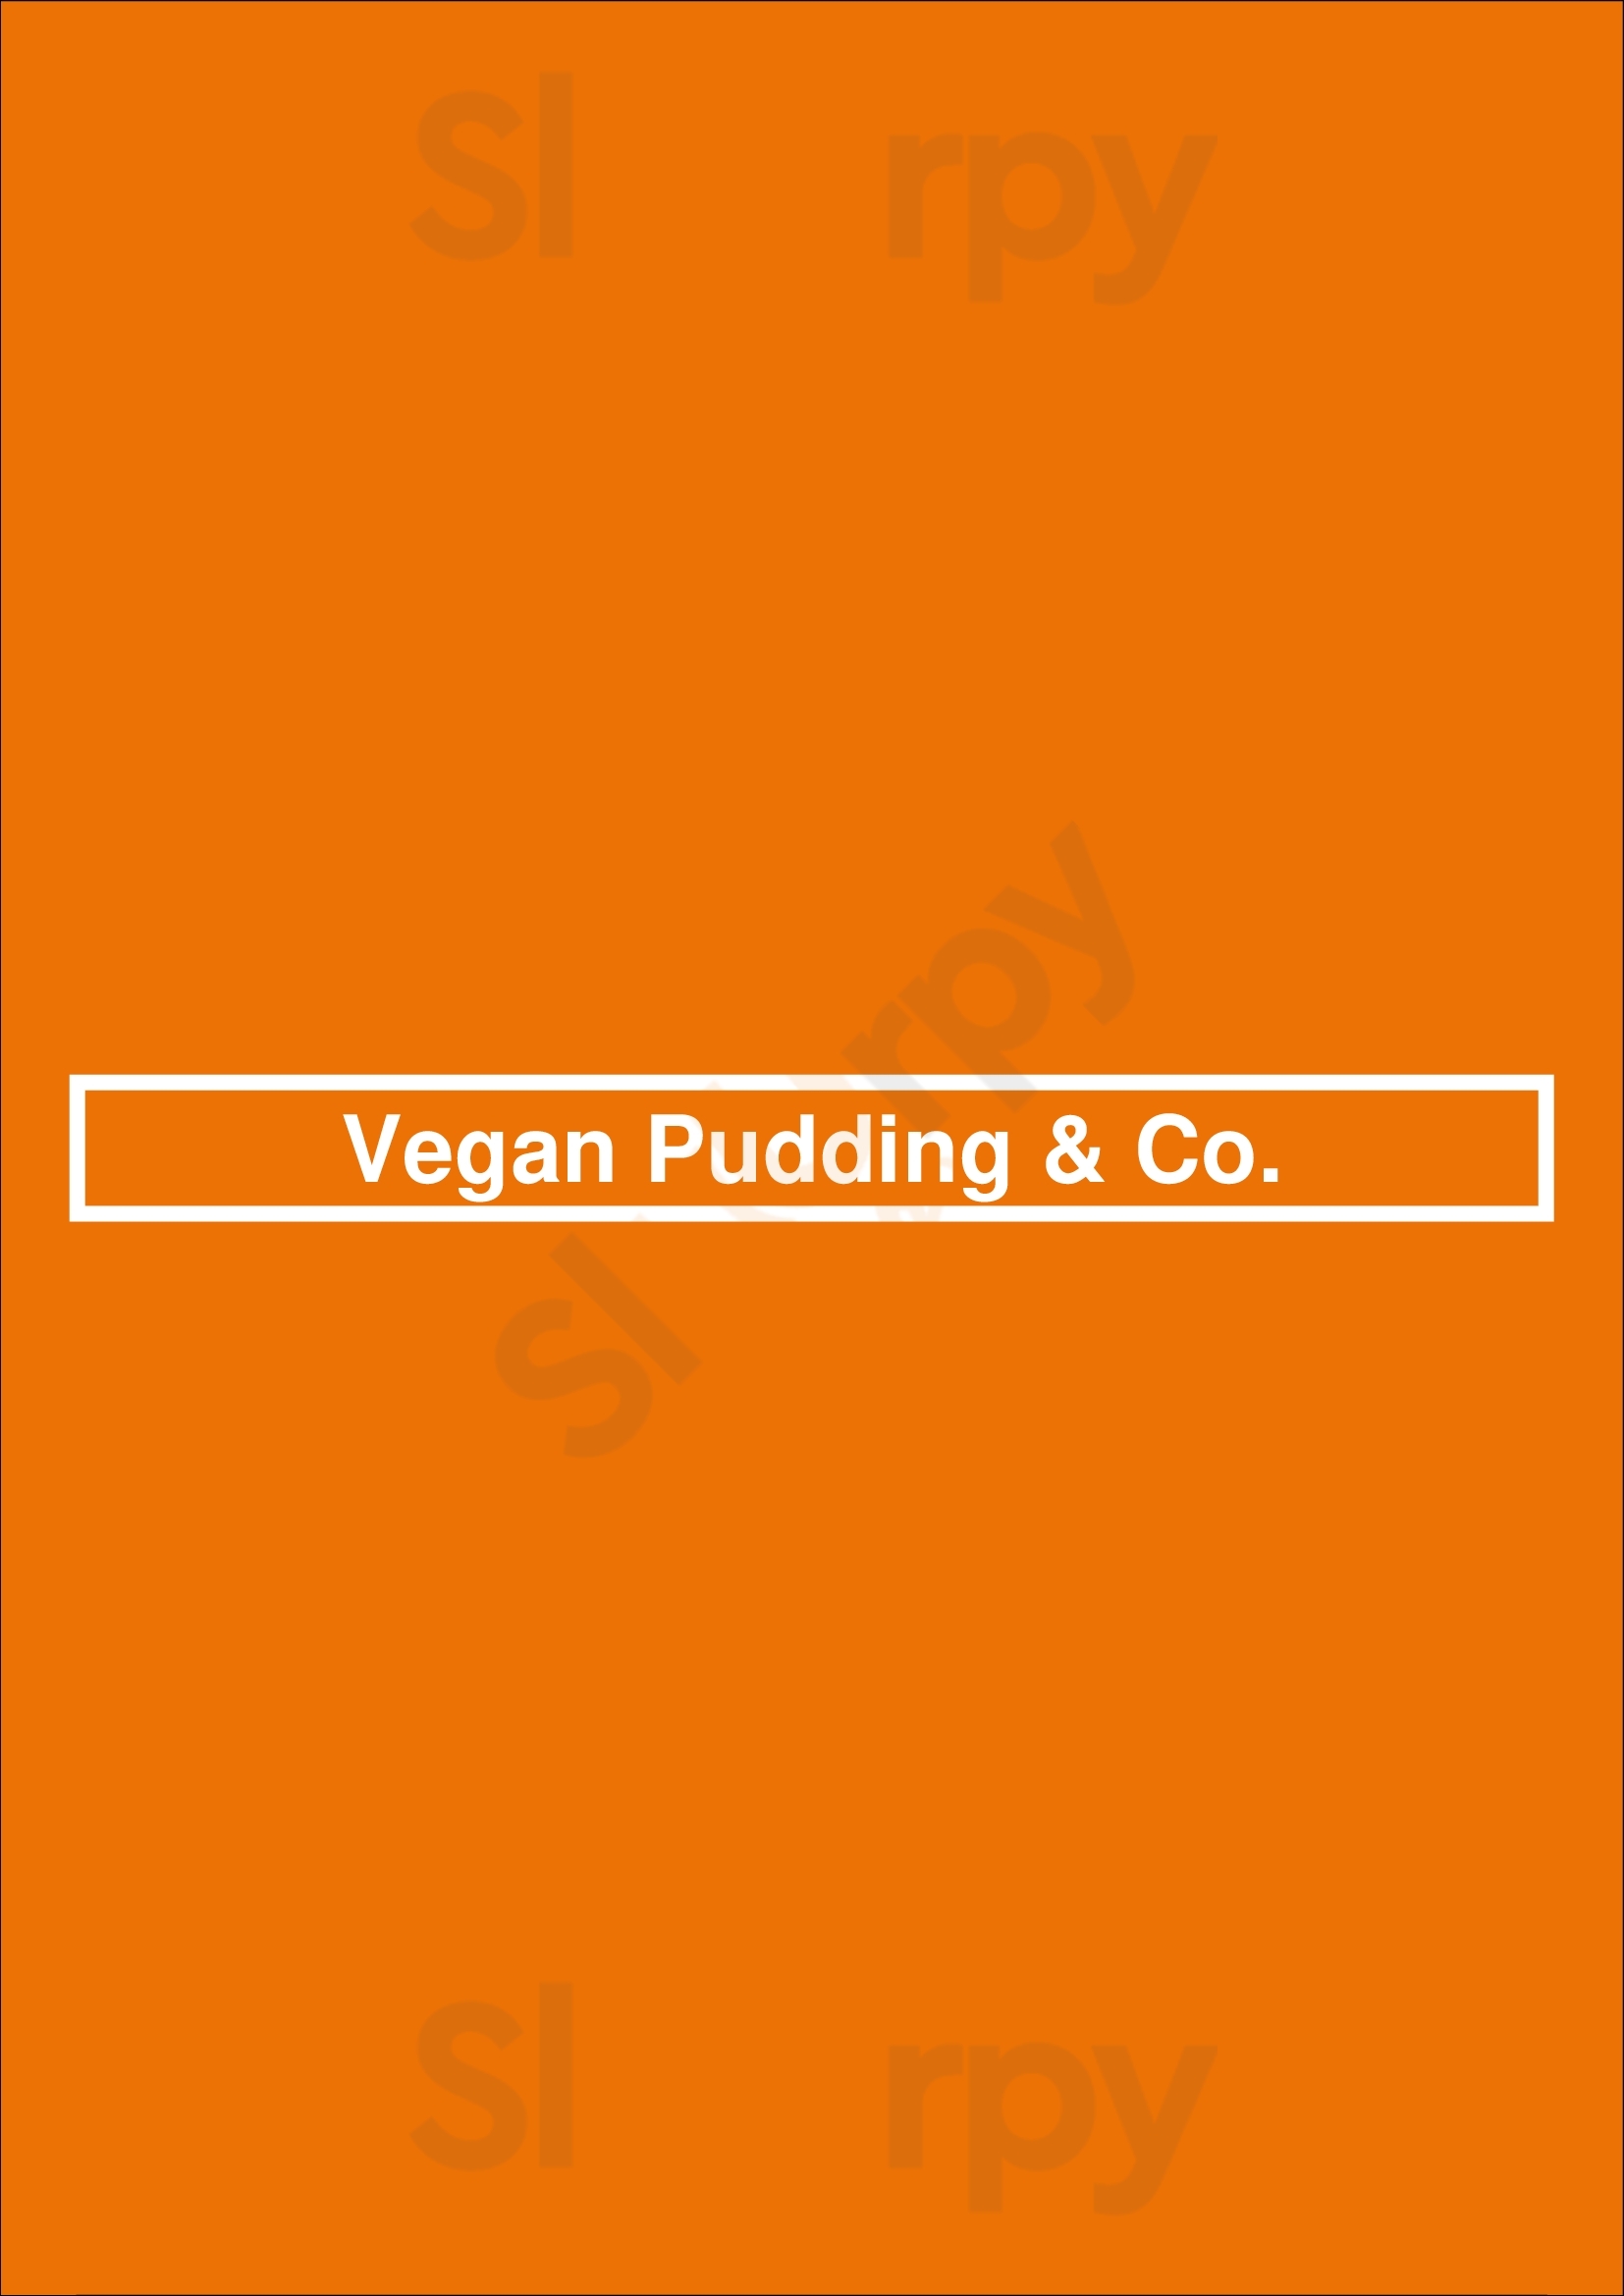 Vegan Pudding & Co. Vancouver Menu - 1